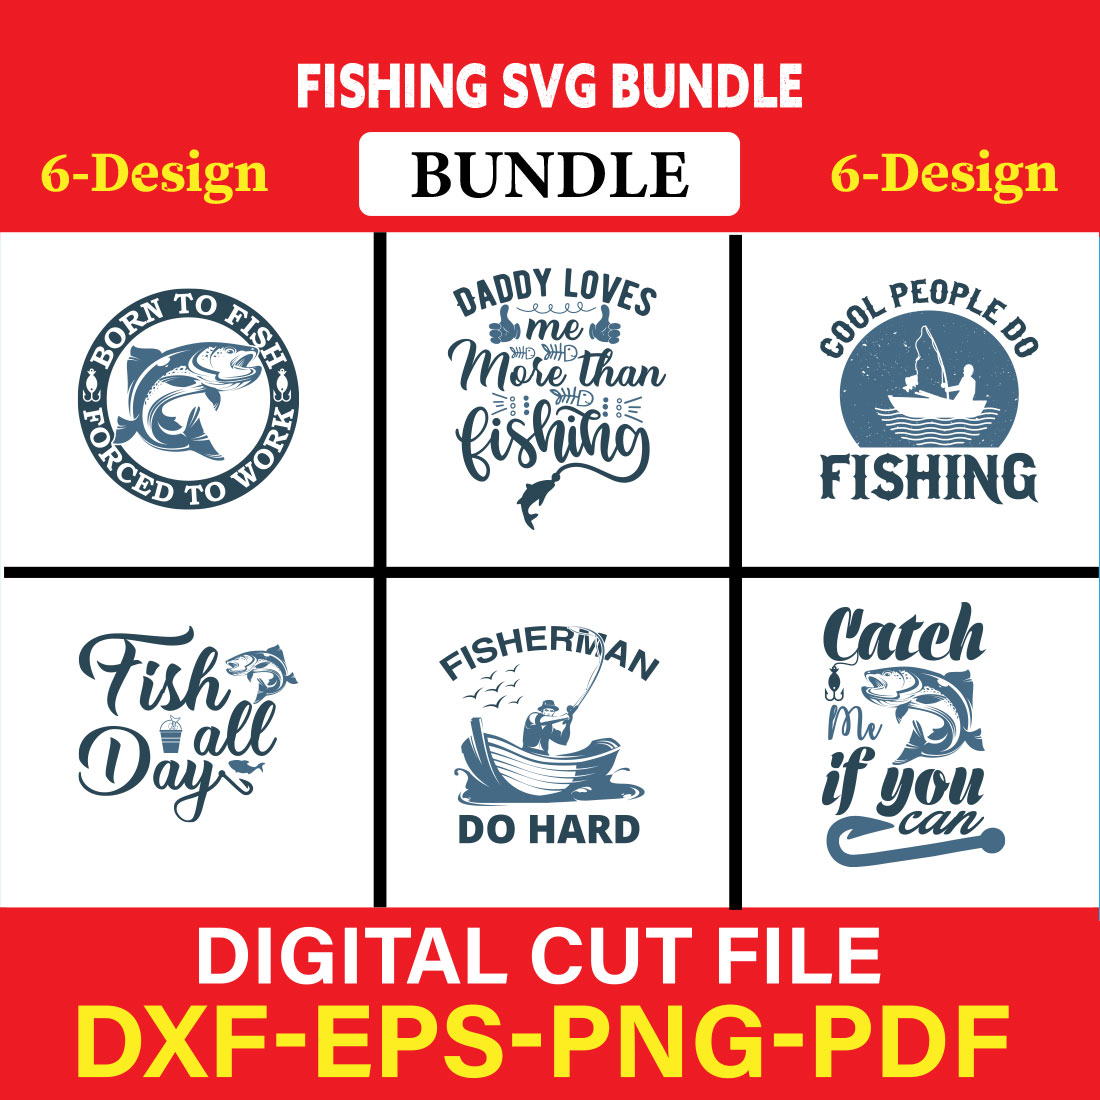 Fishing T-shirt Design Bundle Vol-1 cover image.